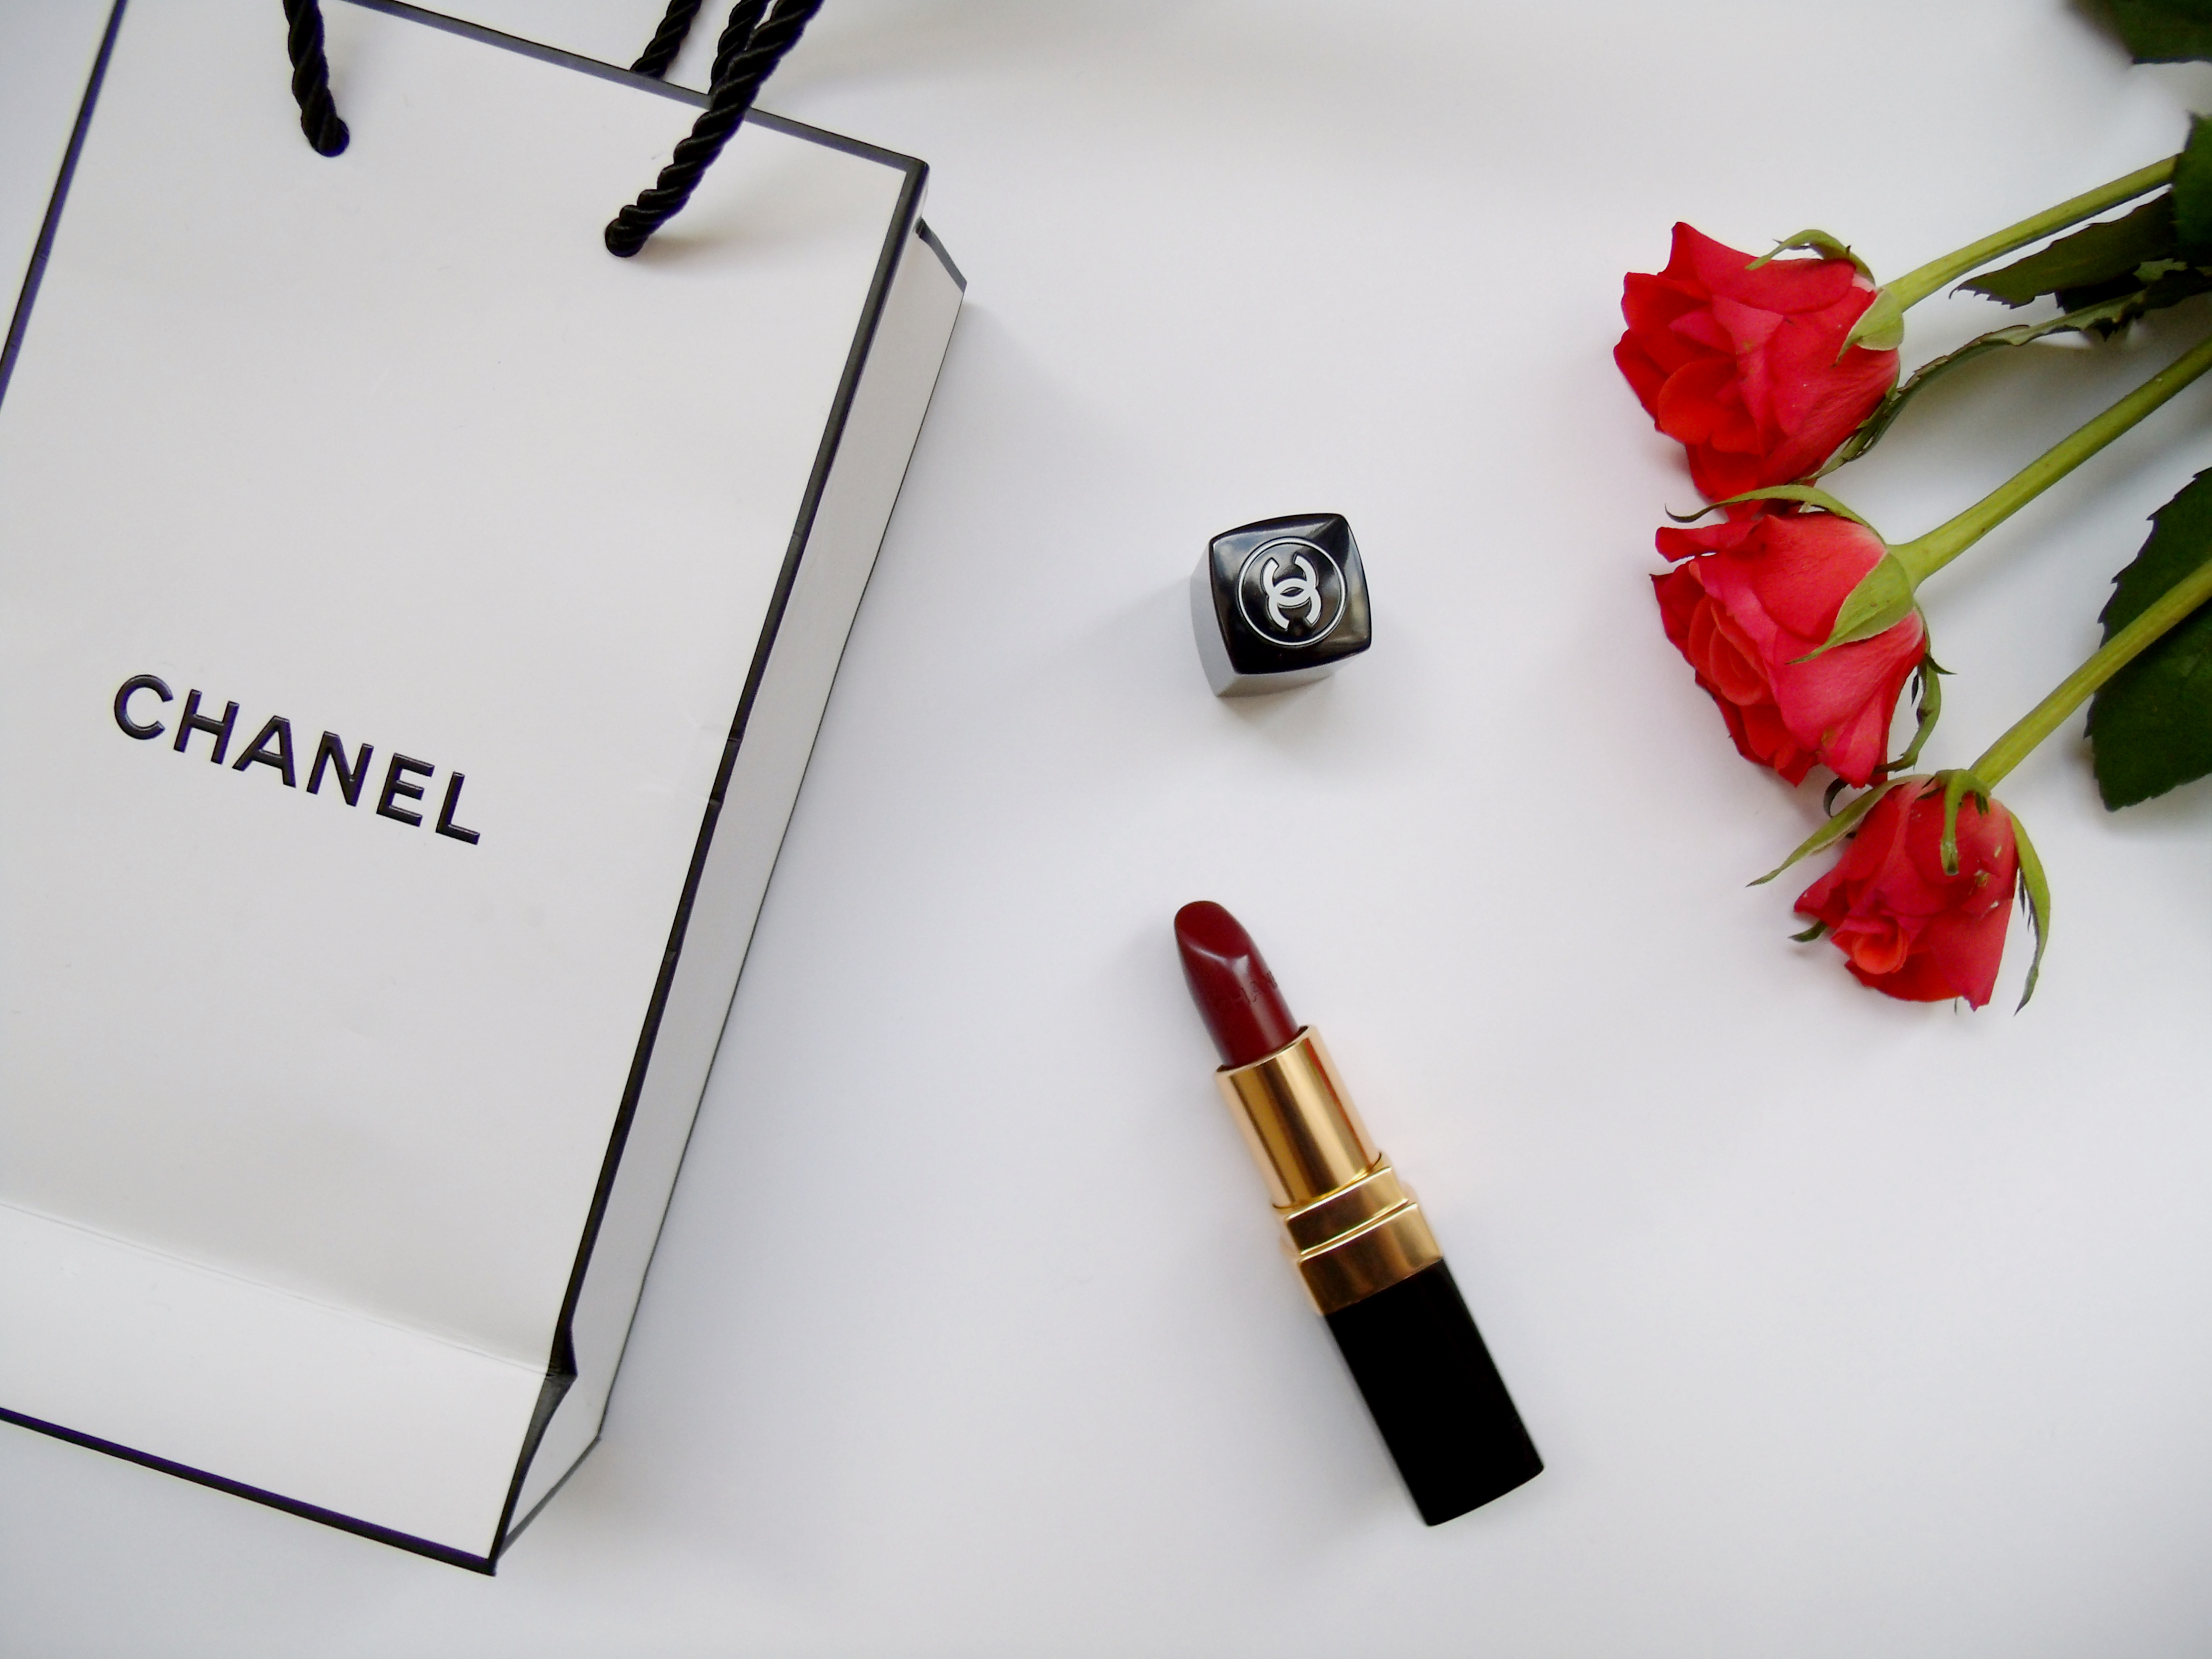 Chanel Rouge Coco Lipsticks: 5 Fun Facts